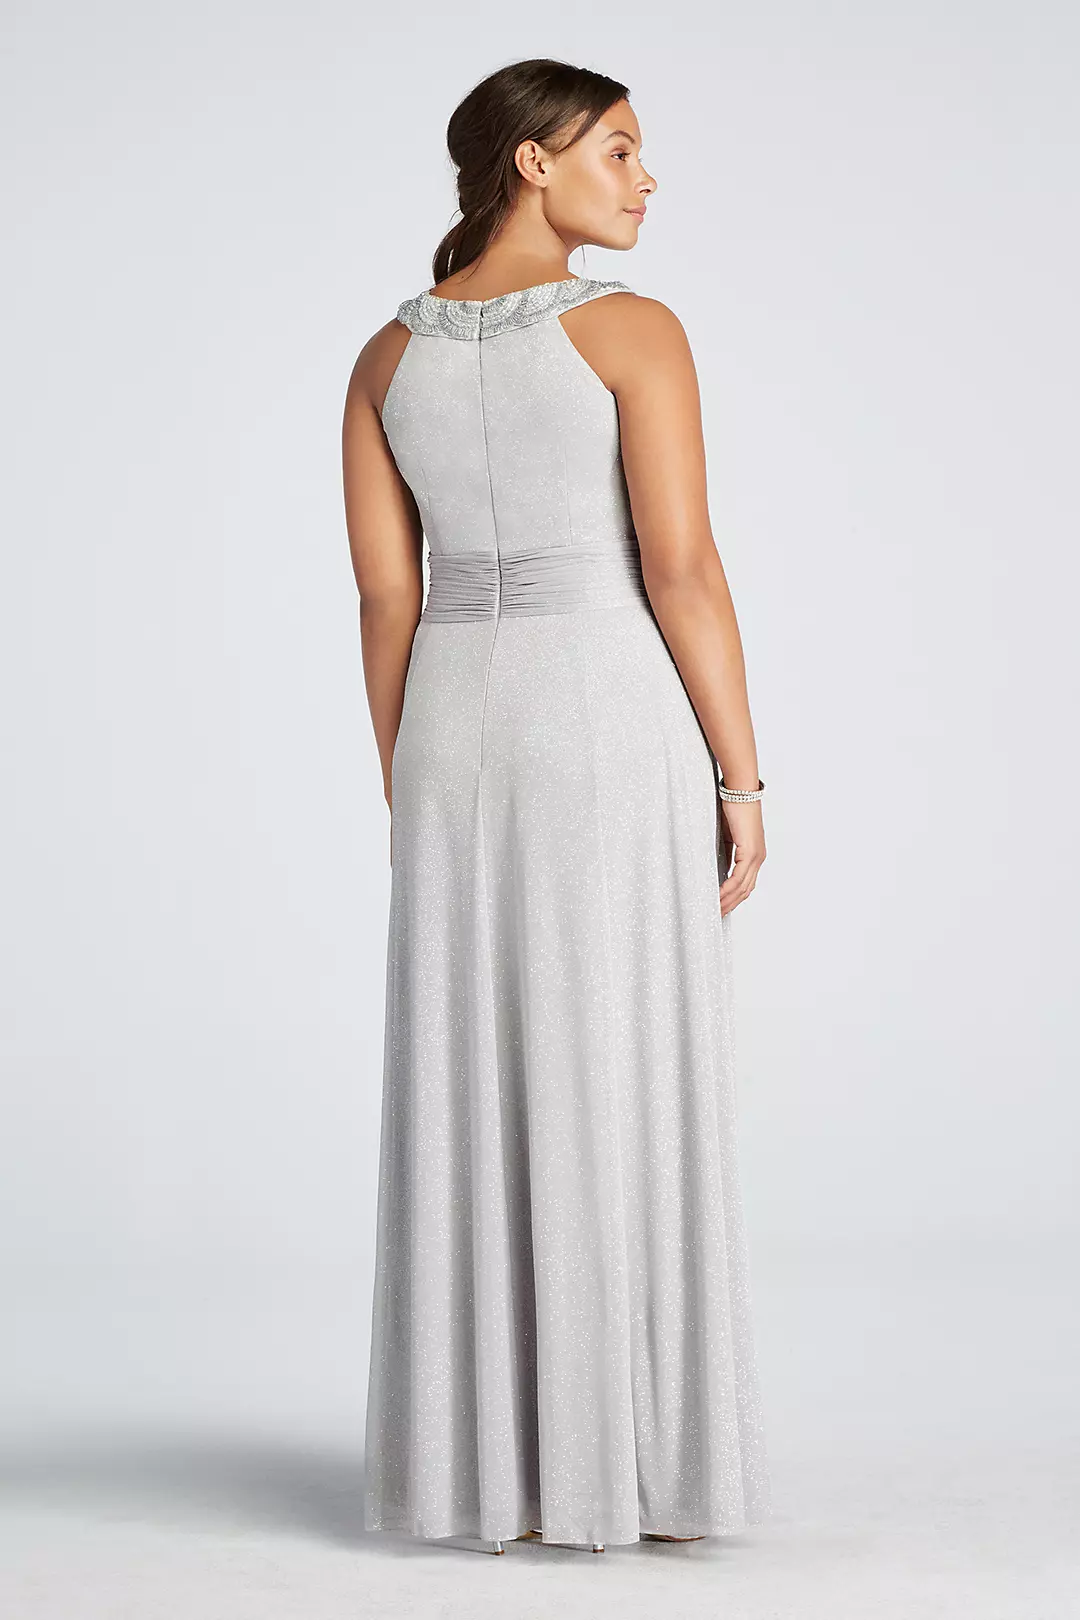 Sleeveless Glitter Jersey Dress with Beaded Straps Image 2